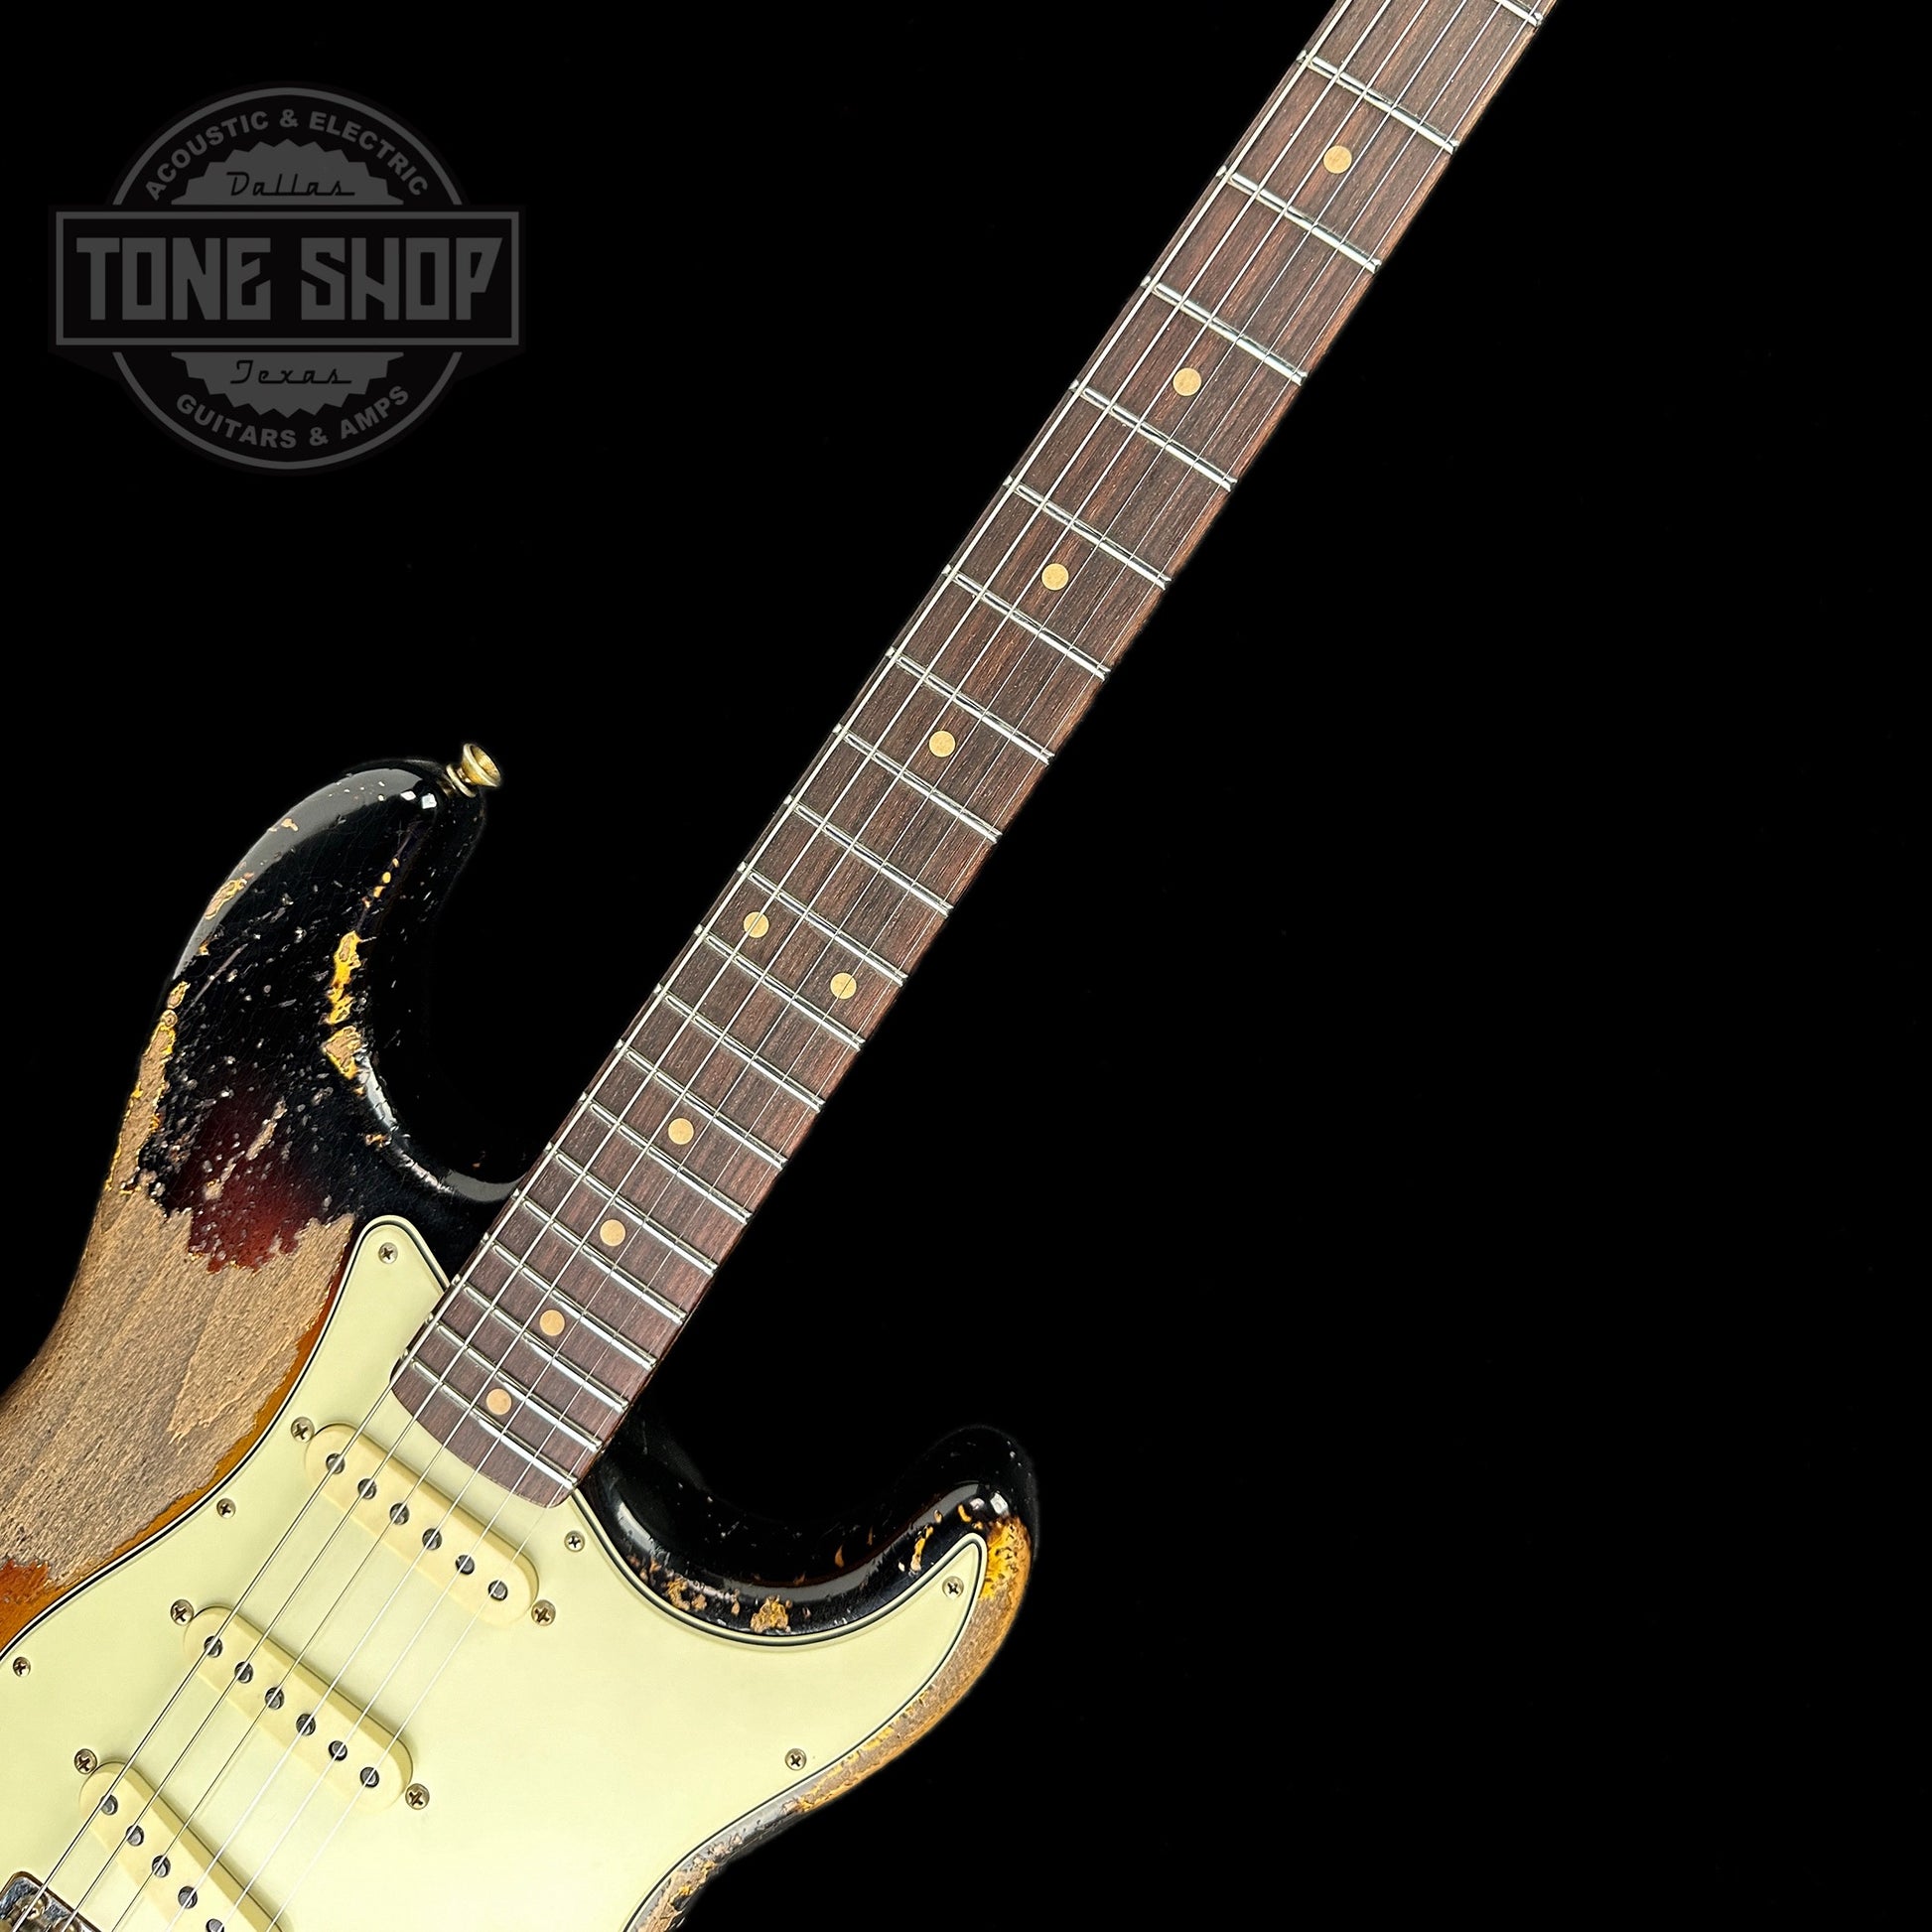 Fretboard of Fender Custom Shop Limited Edition 61 Bone Tone Strat Super Heavy Relic Super Faded Aged 3 Color Sunburst.